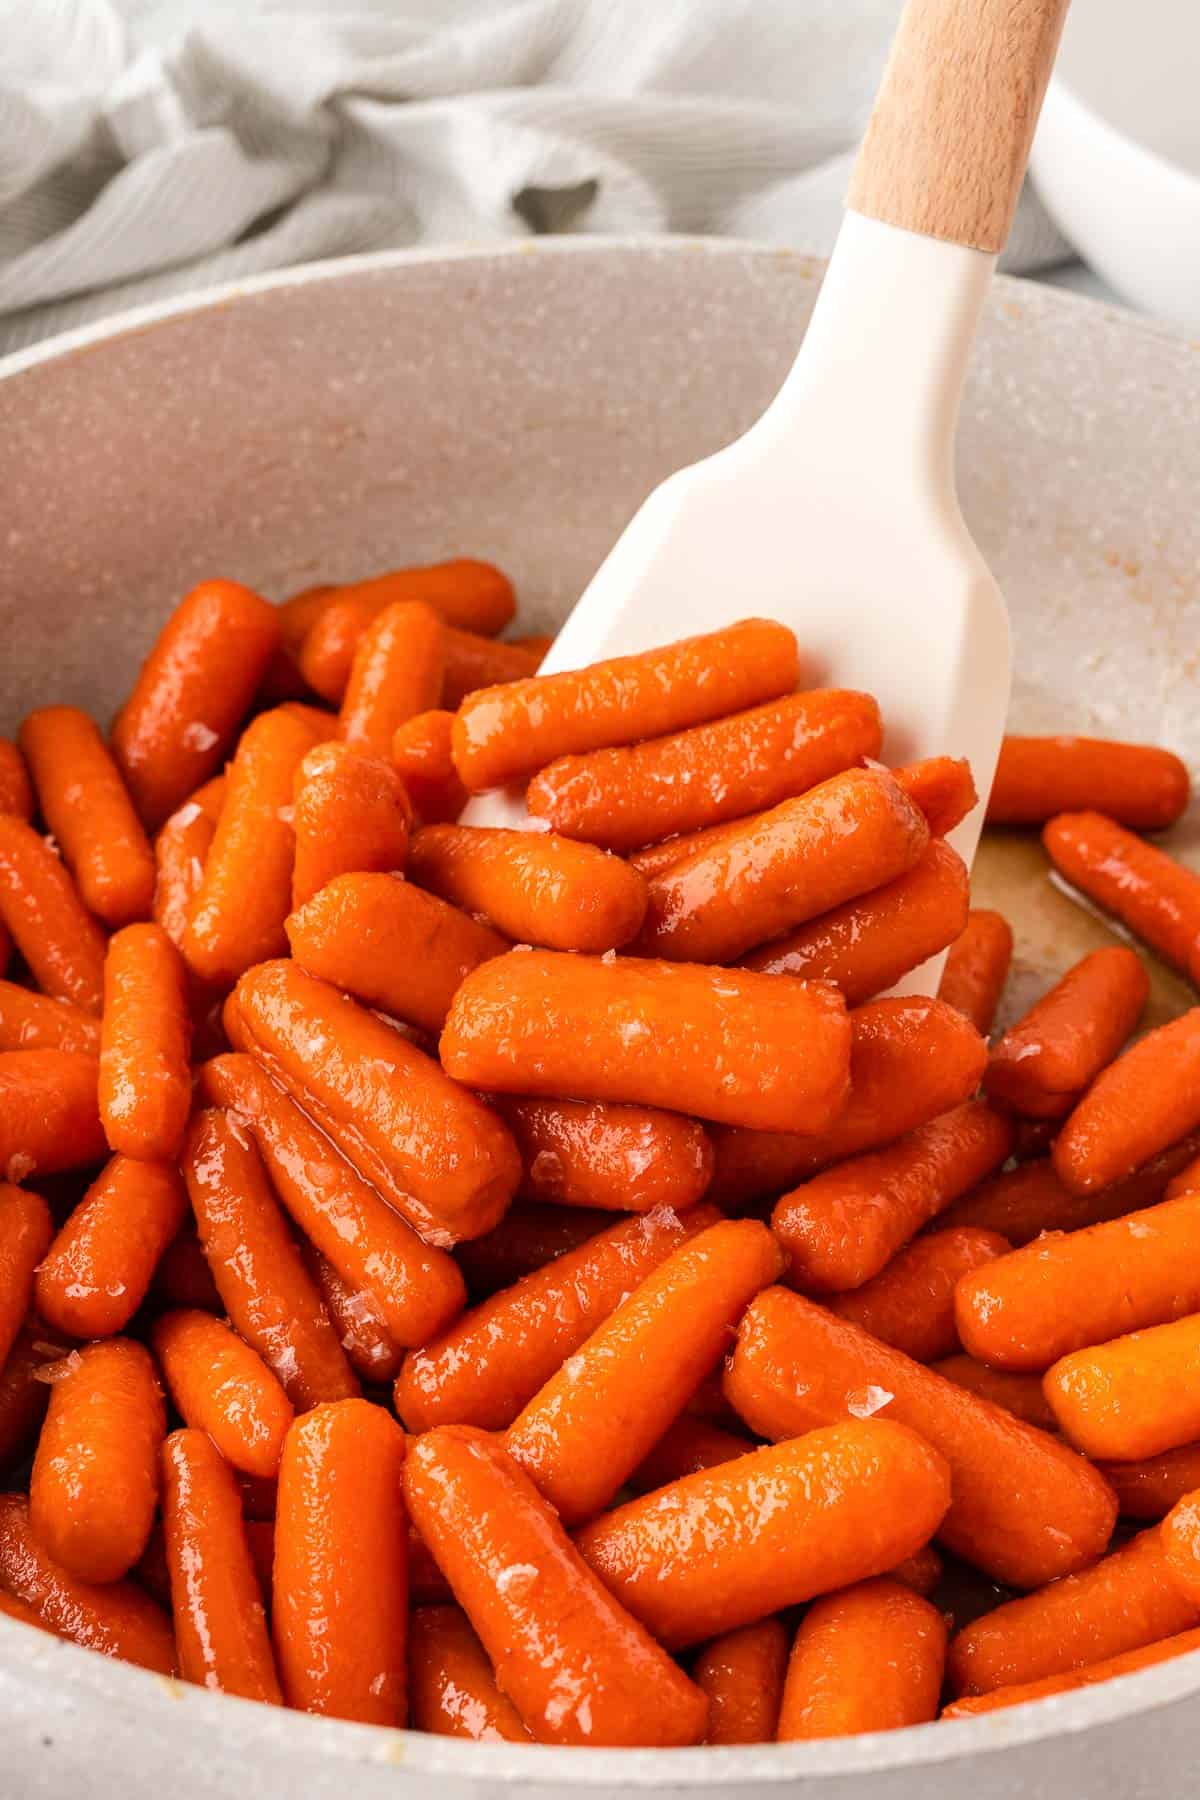 stirring the glazed carrots